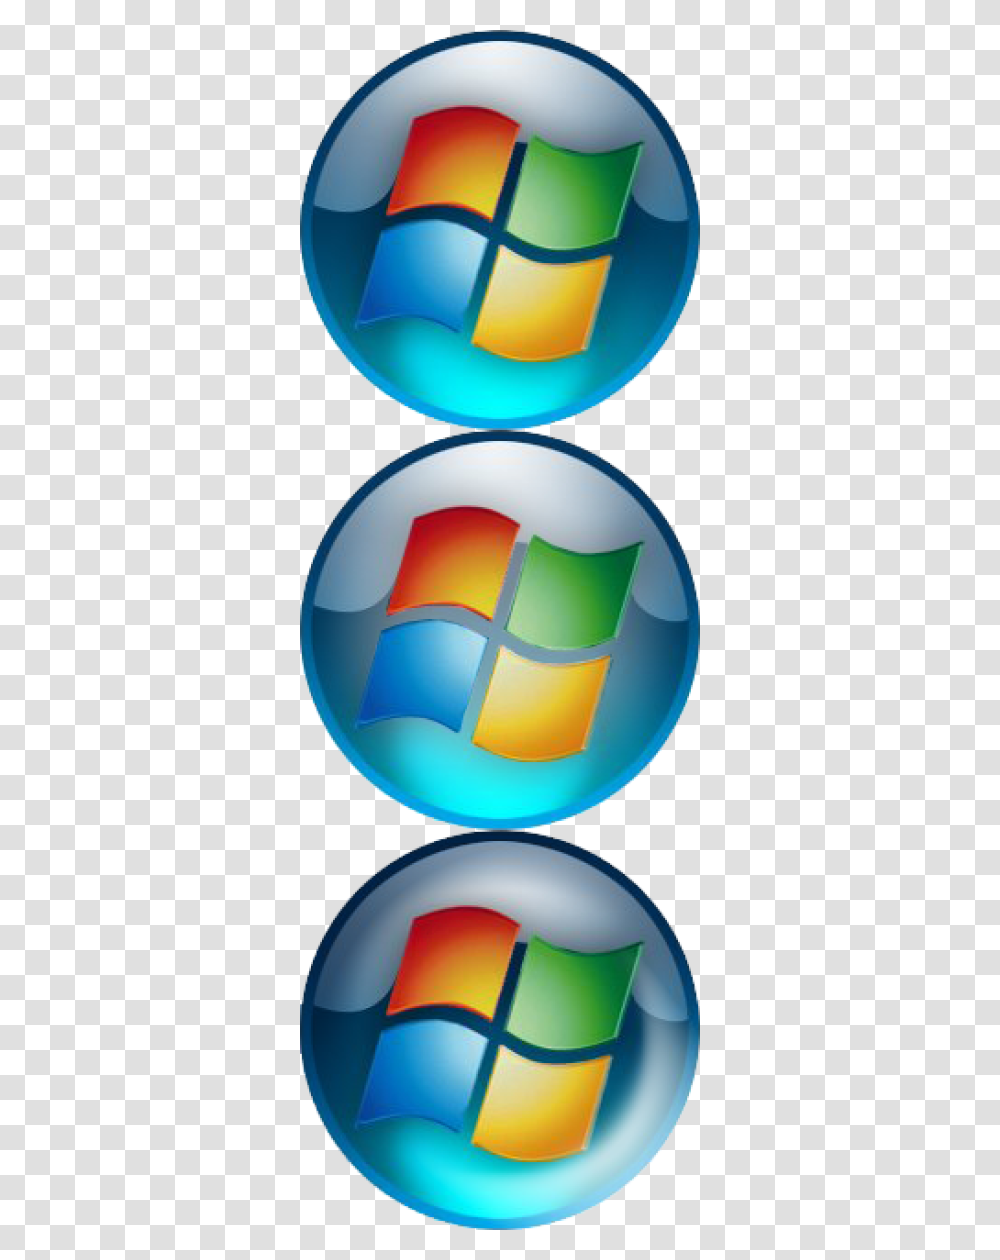 Windows 7 Start Icon Amp Clipart Free Windows 7 Start Button Classic Shell, Sphere, Light, Logo Transparent Png